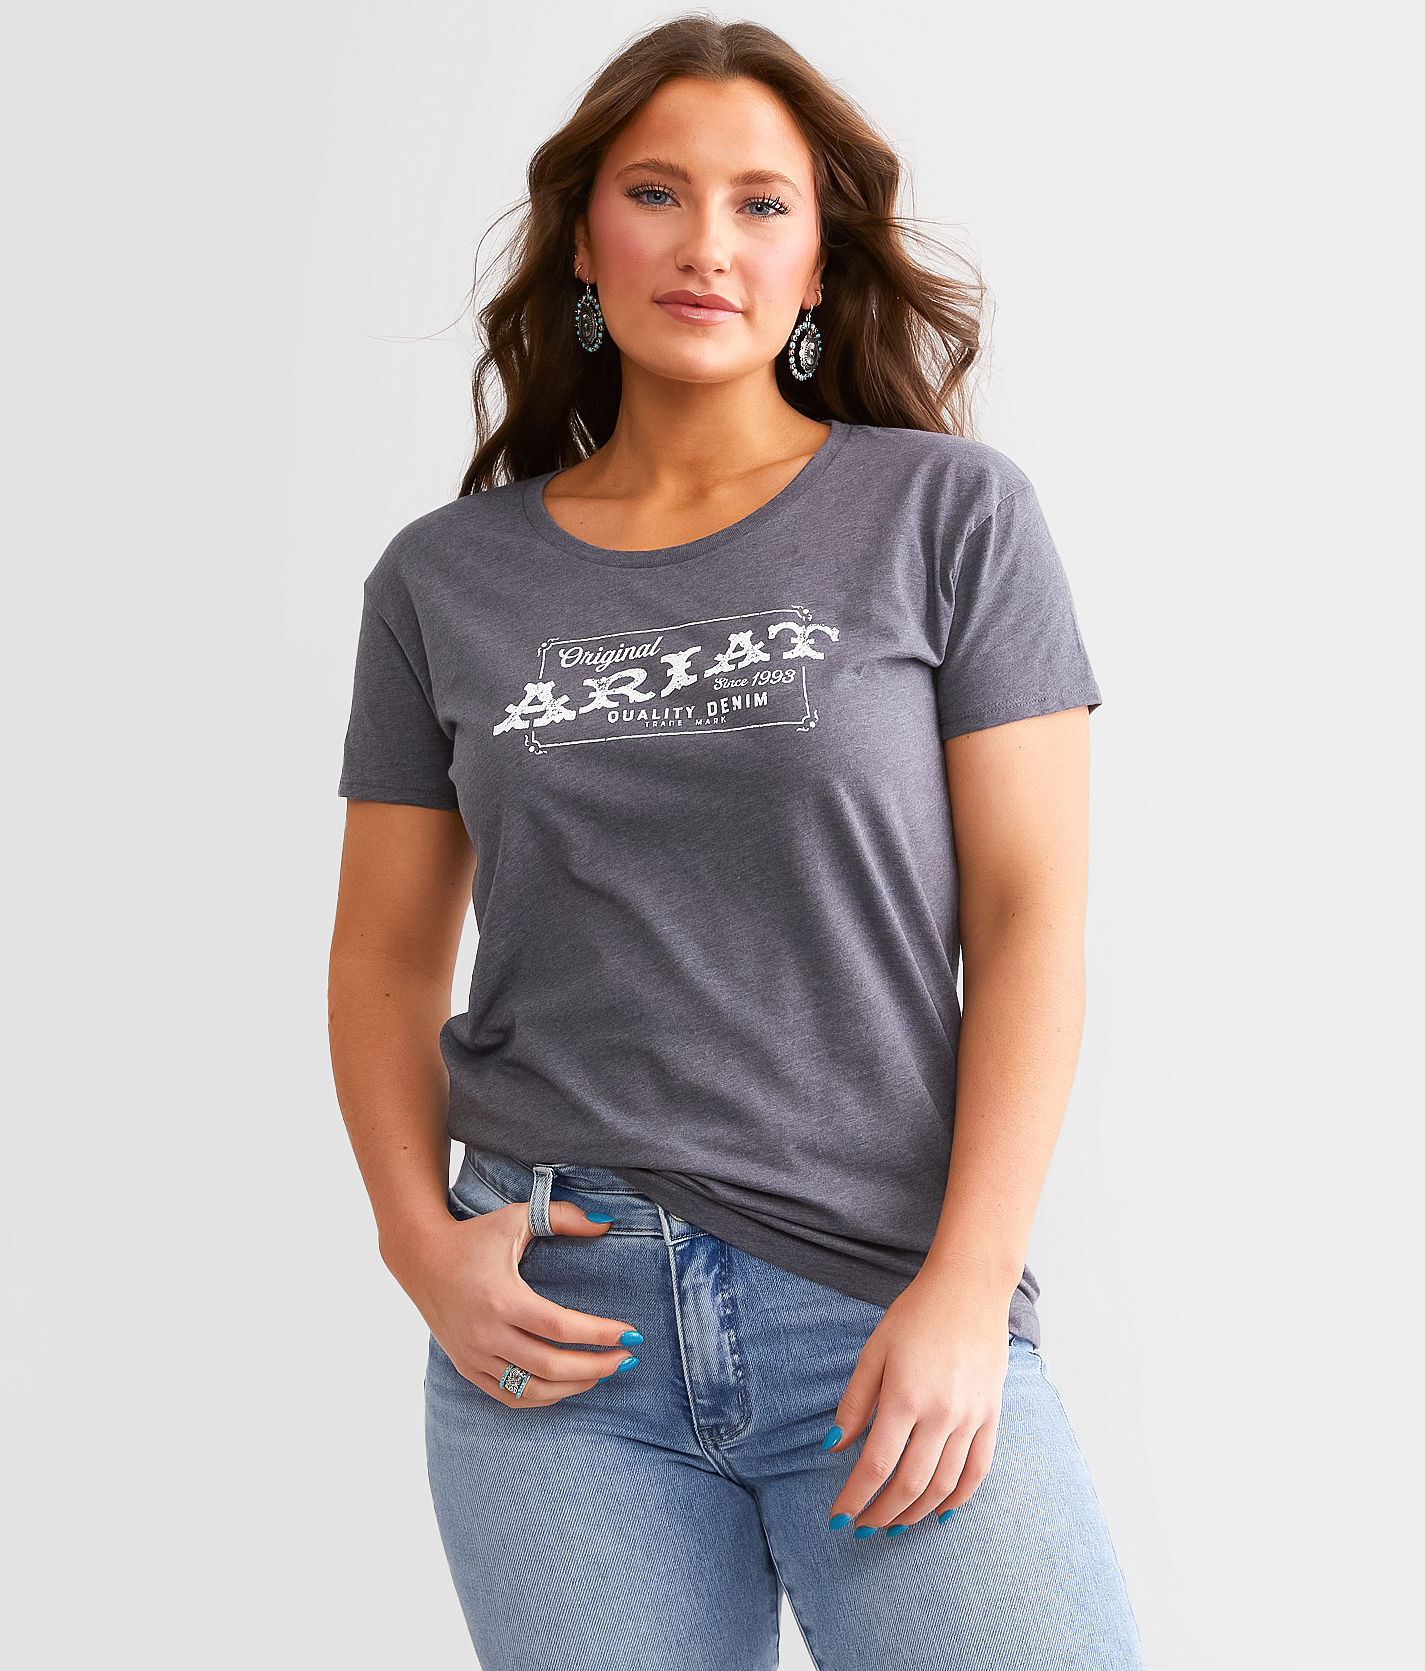 Ariat Denim Label T-Shirt  - Grey - female - Size: Large